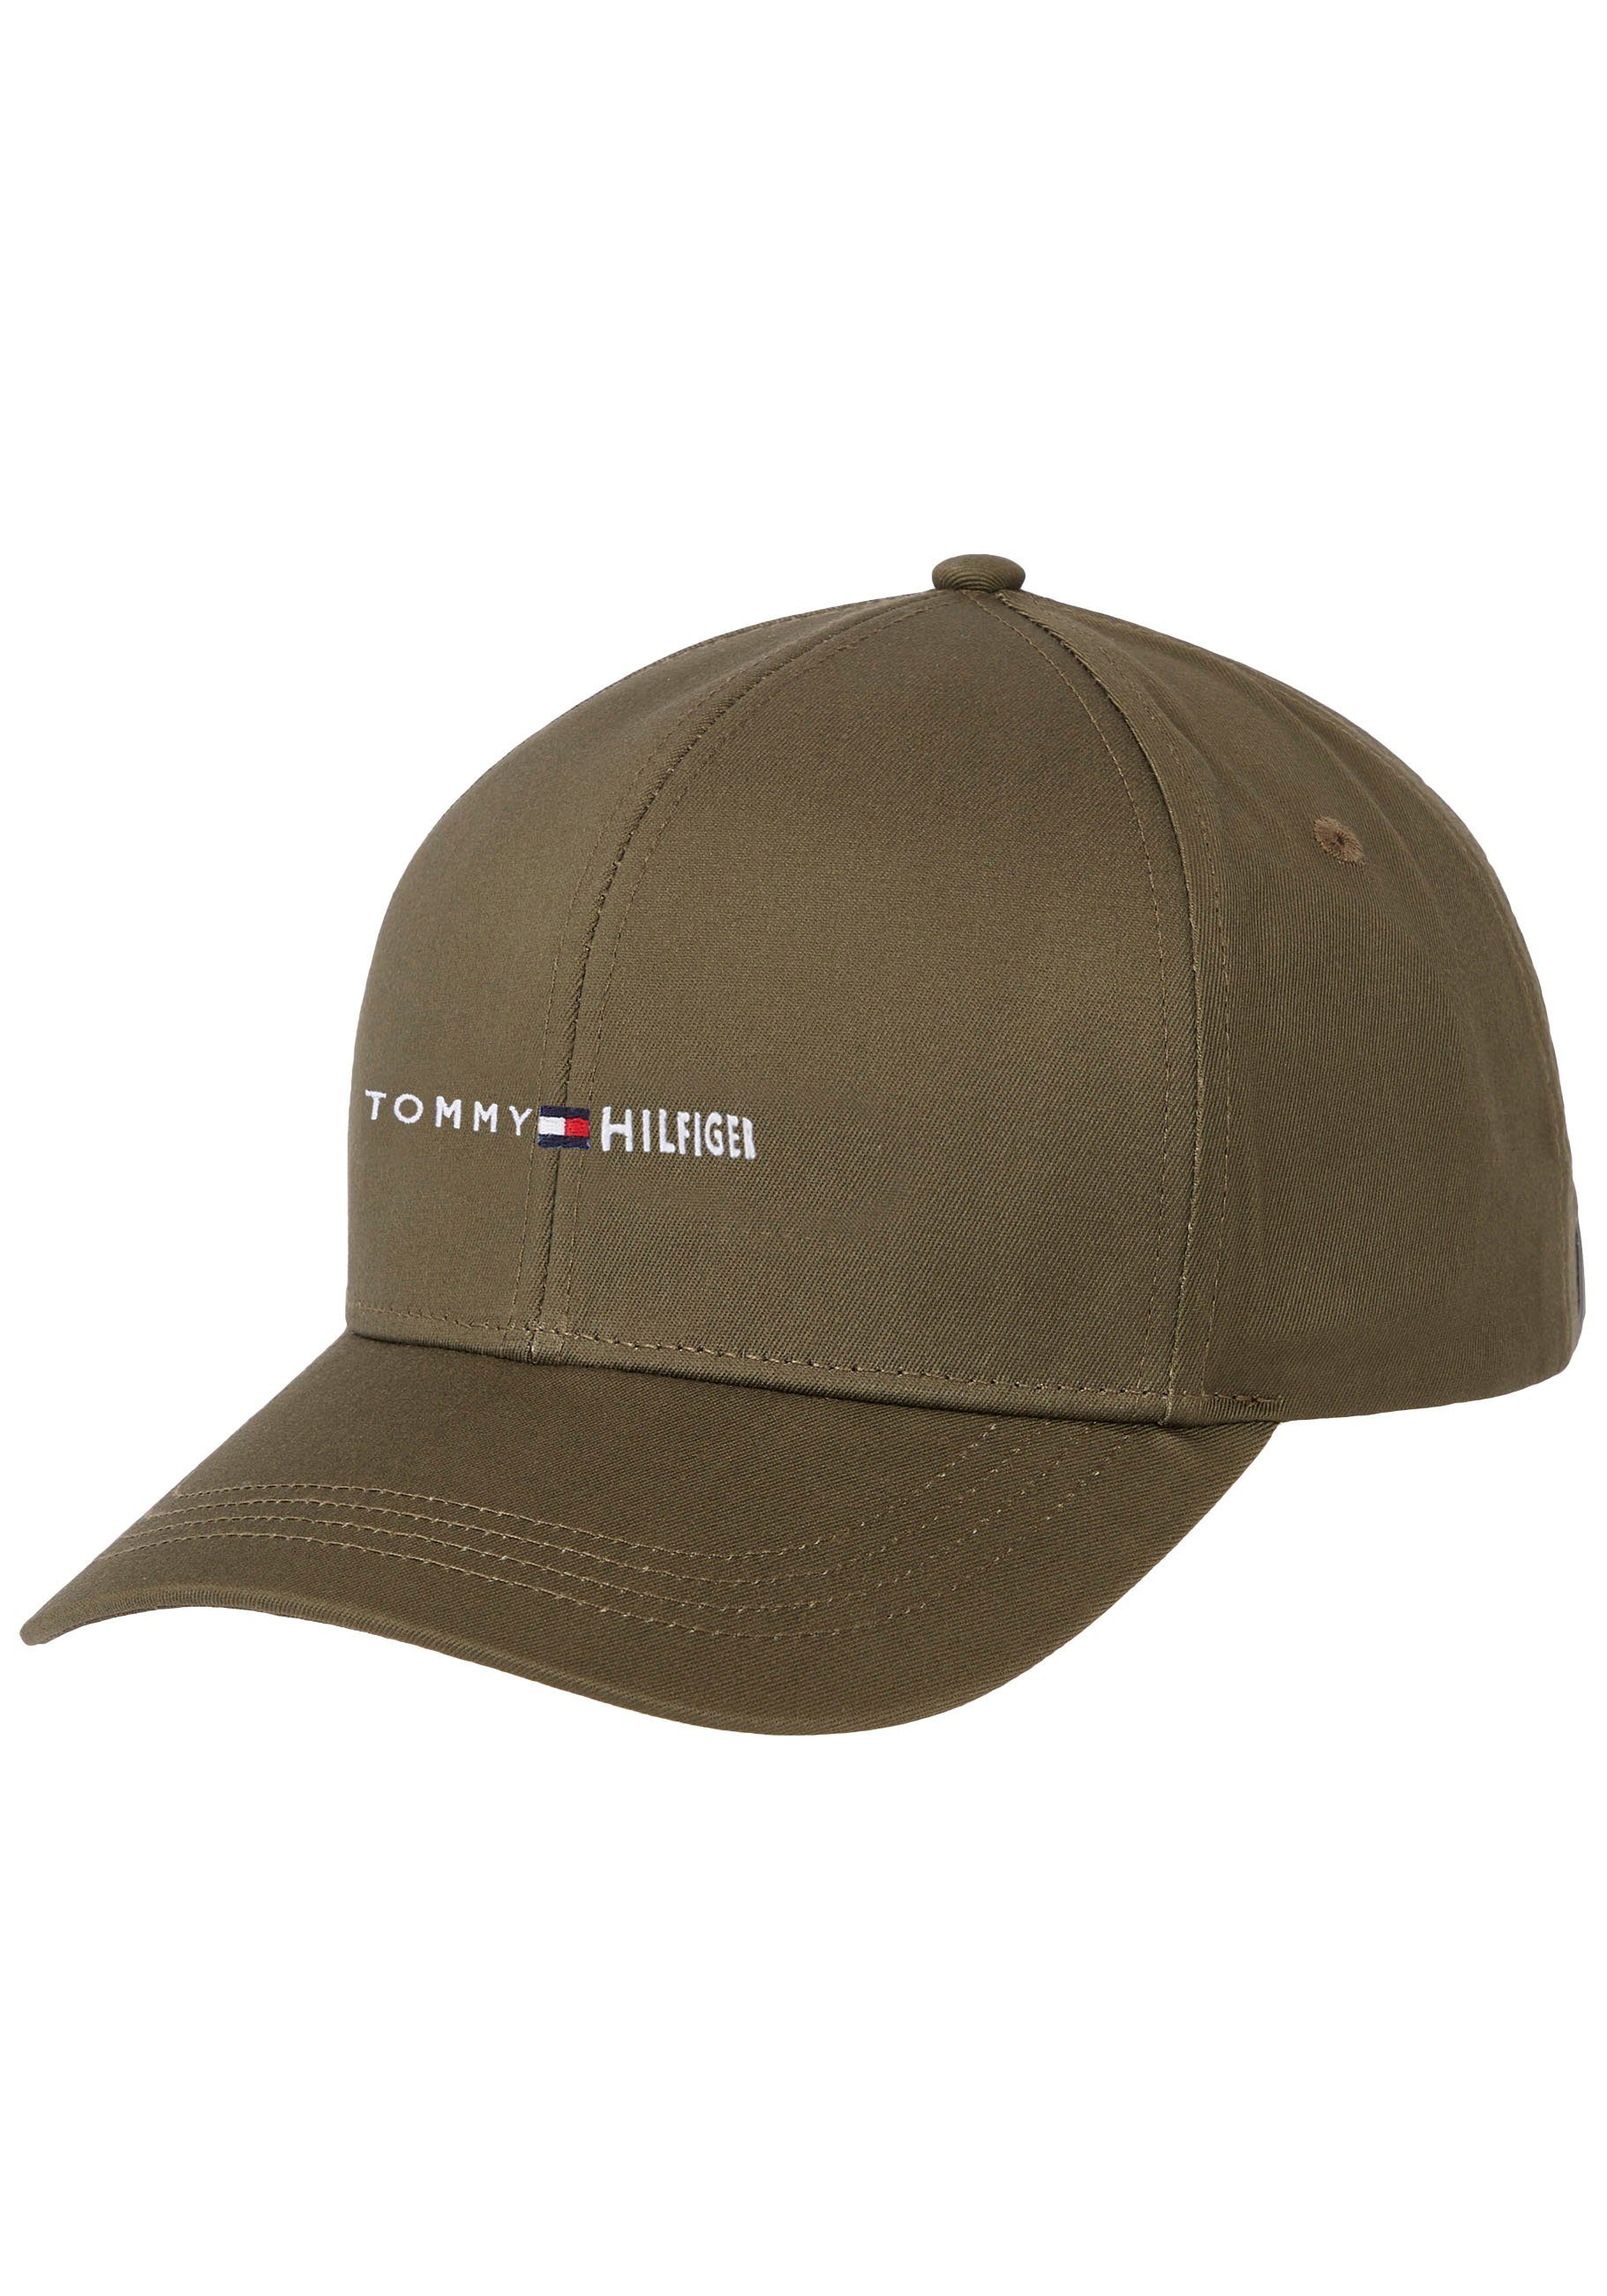 mit Military CAP Faded Tommy Hilfiger SKYLINE Baseball Flag-Gravur Klemmverschluss Cap auf Tommy